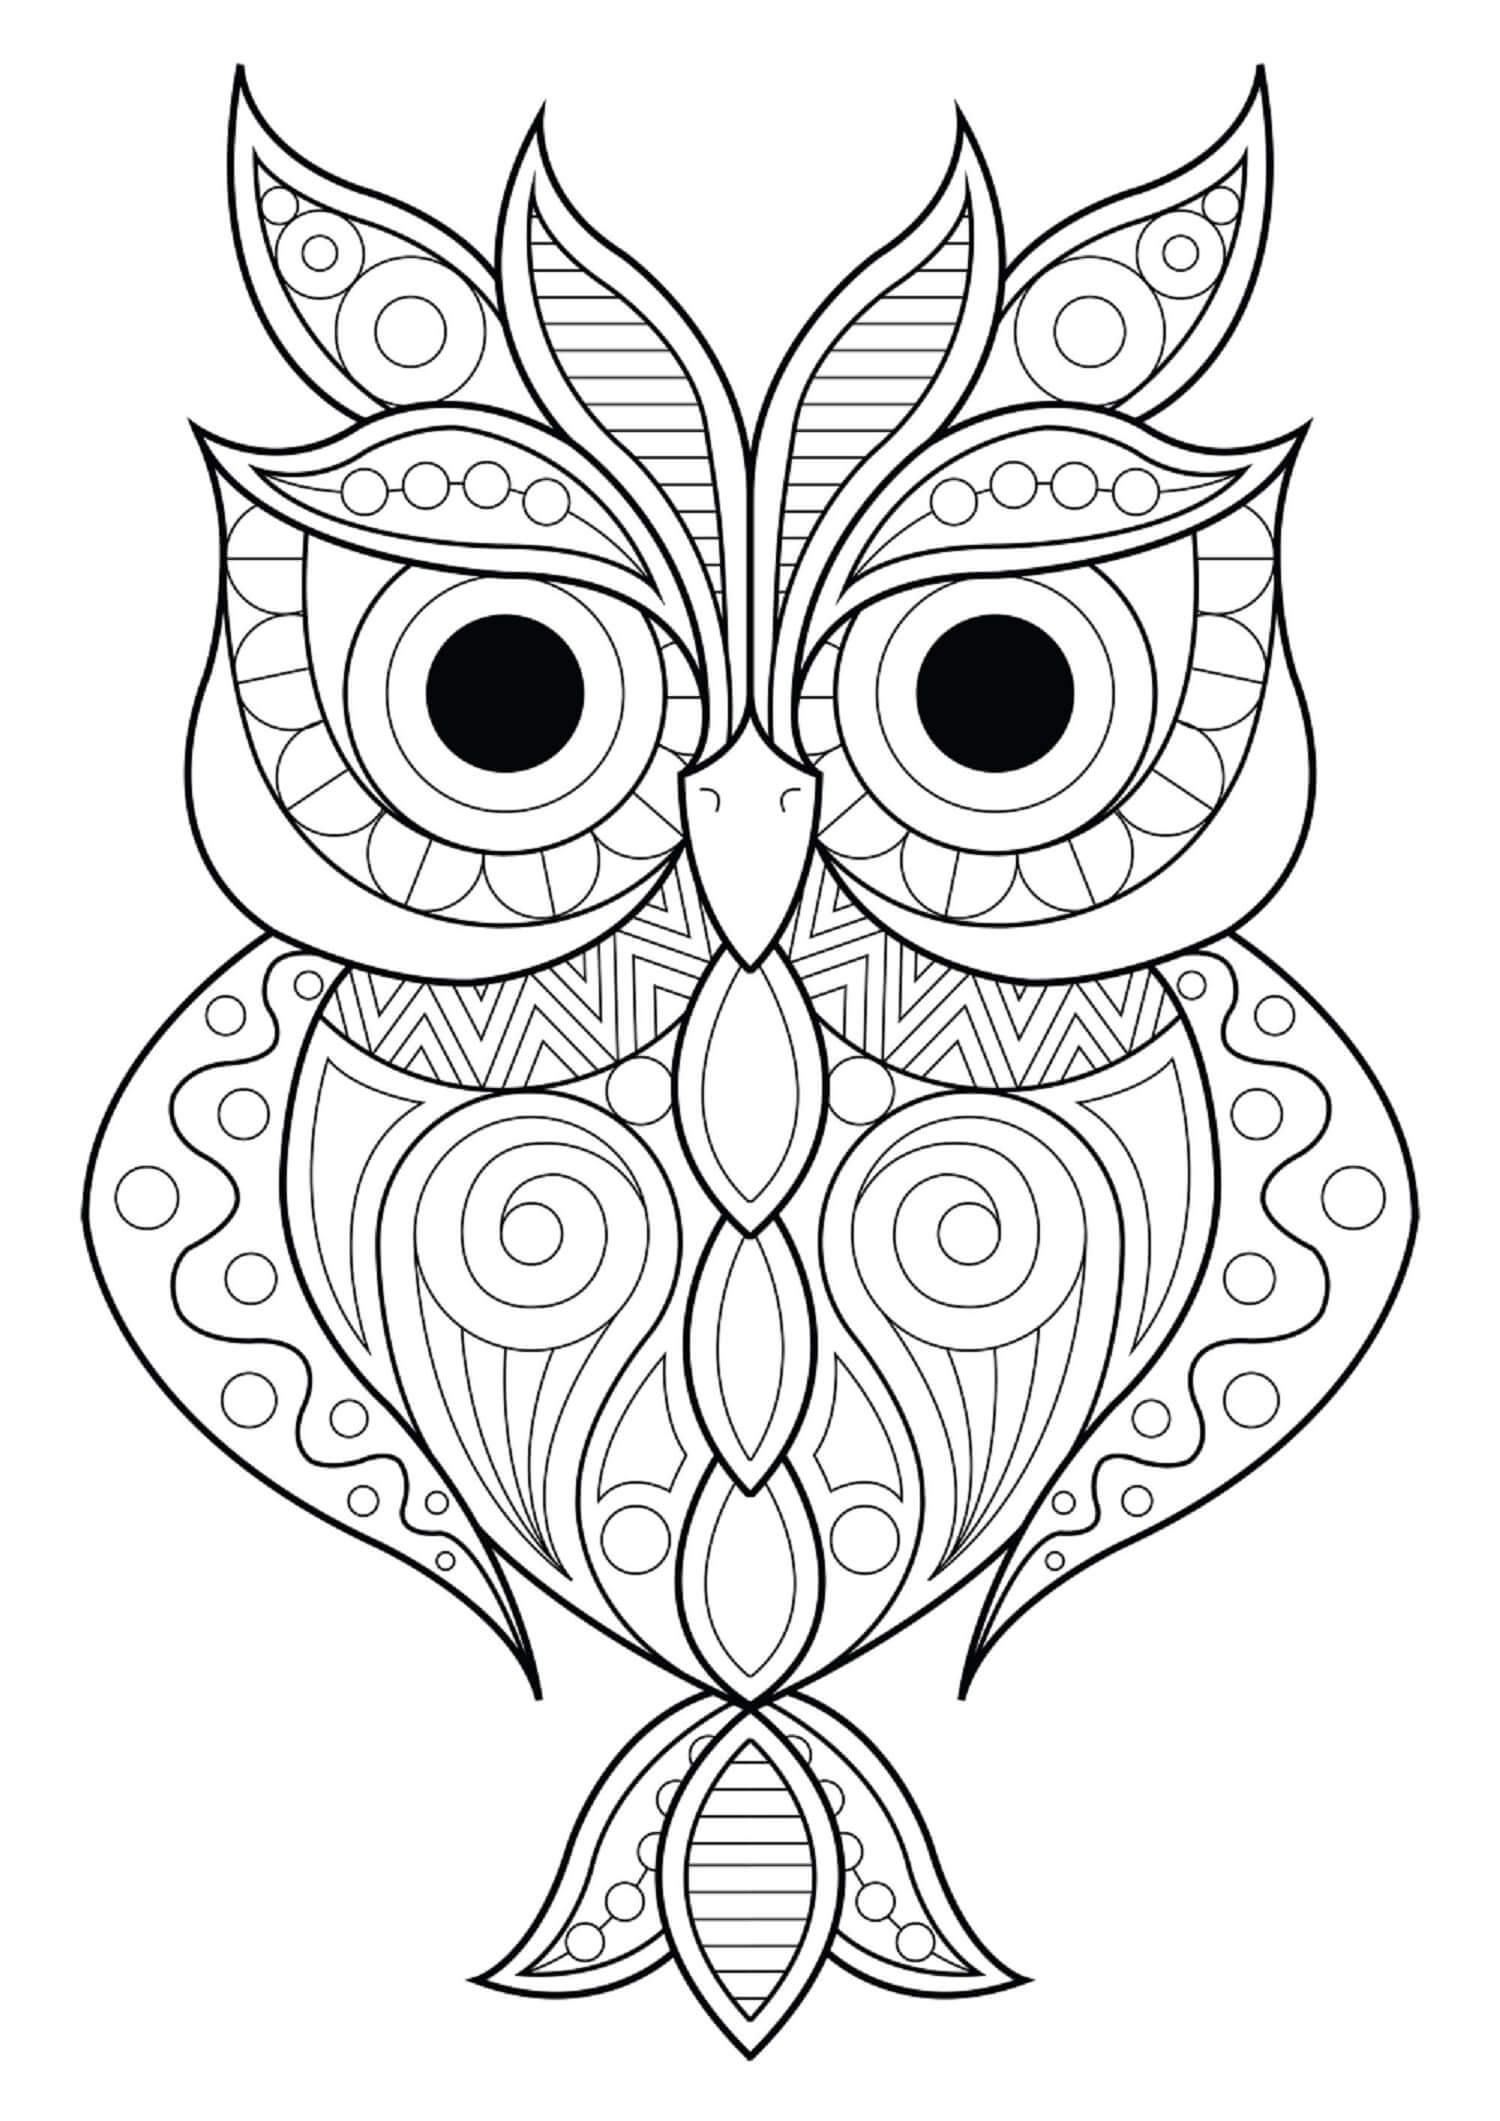 Mandala Owl Coloring Page - Sheet 4 Mandalas